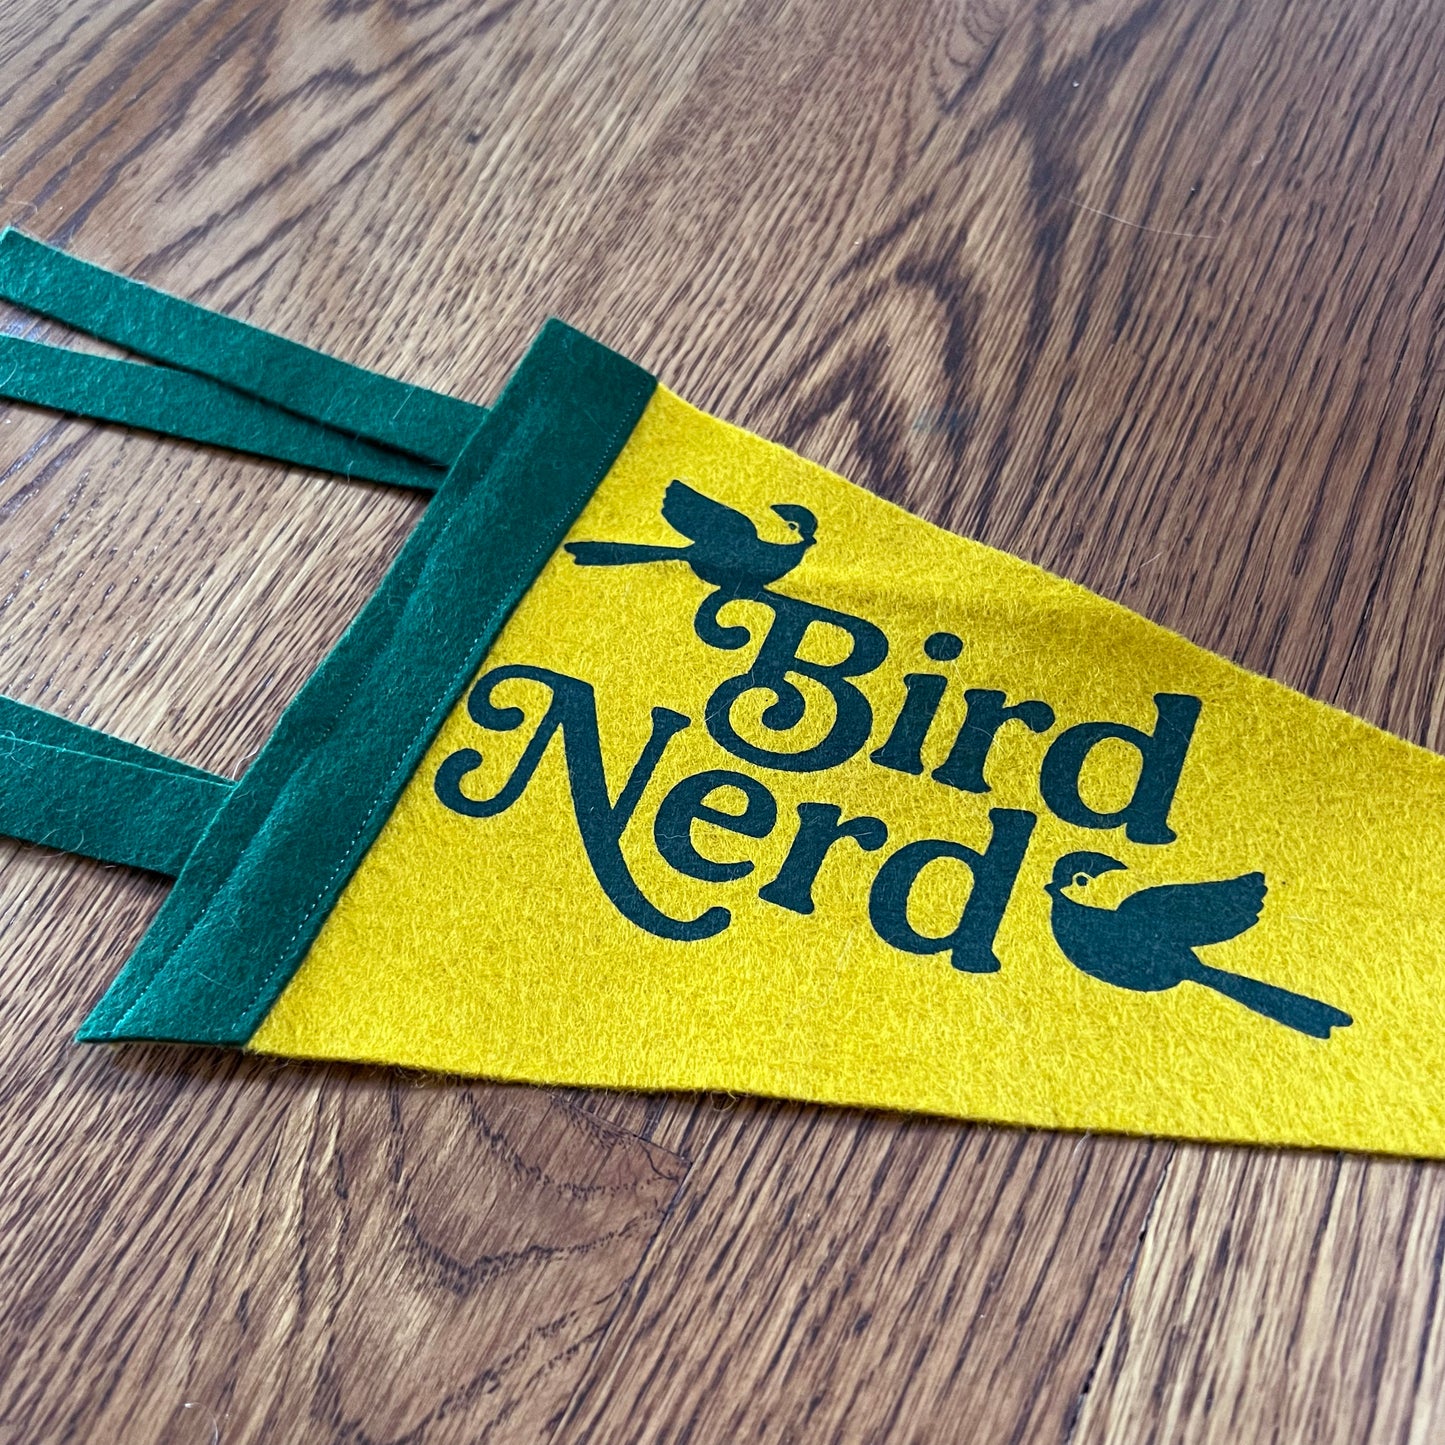 Bird Nerd Felt Pennant - 6x12 inches